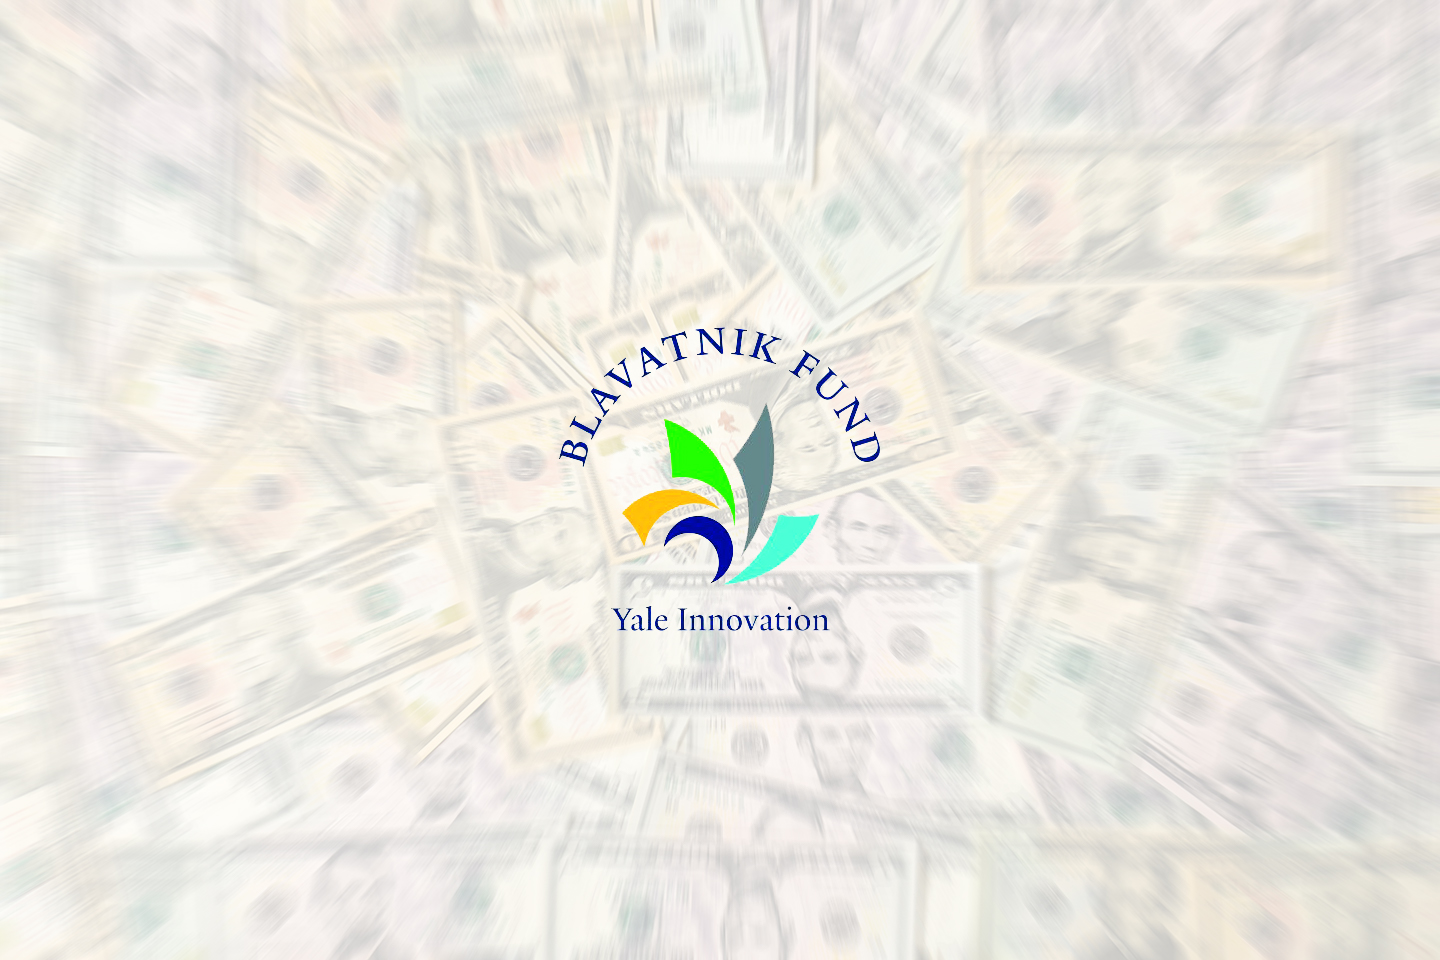 Blavatnik Logo on money collage